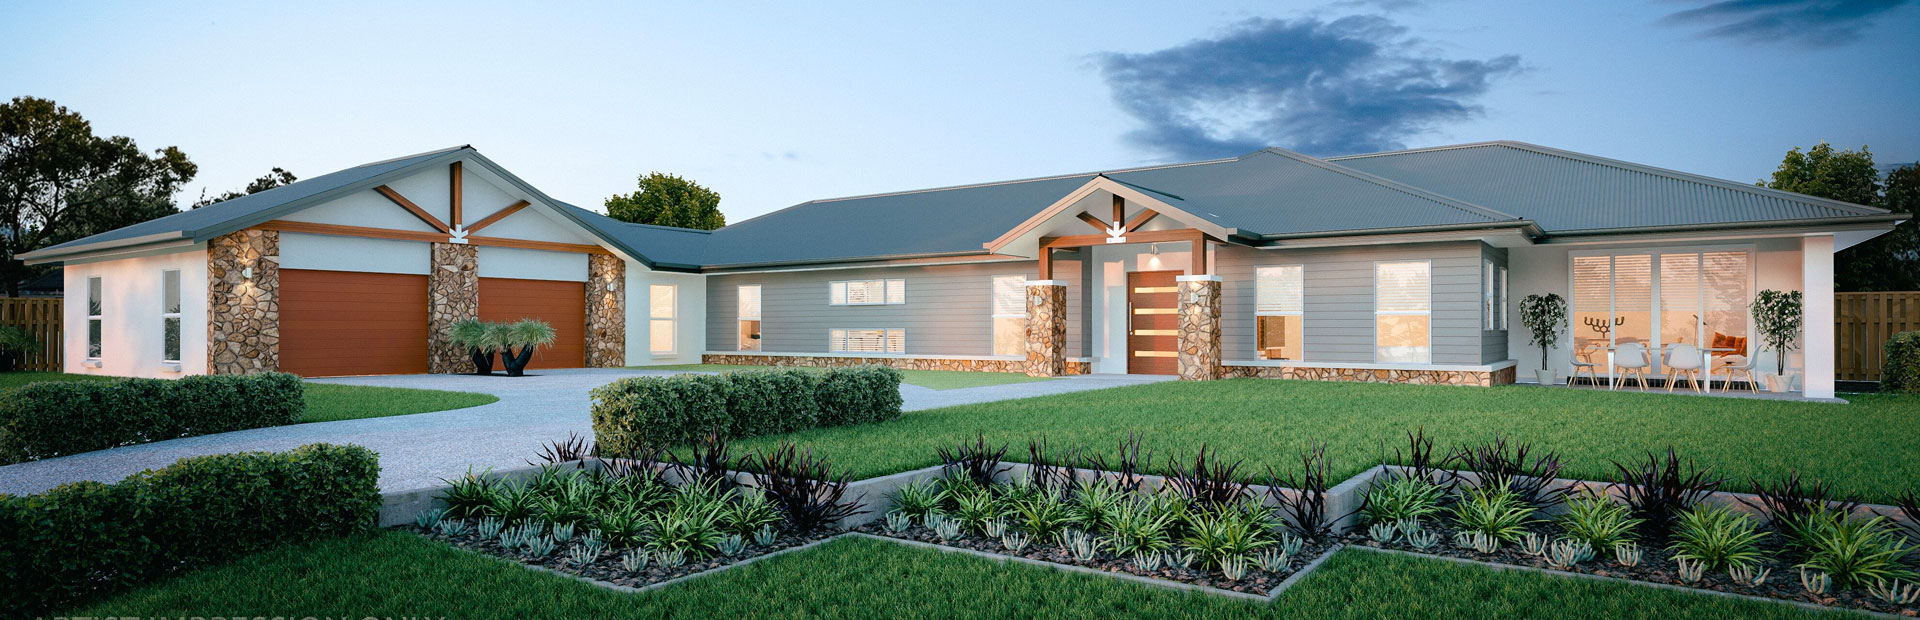 Pauanui 450 Lifestyle Home Design